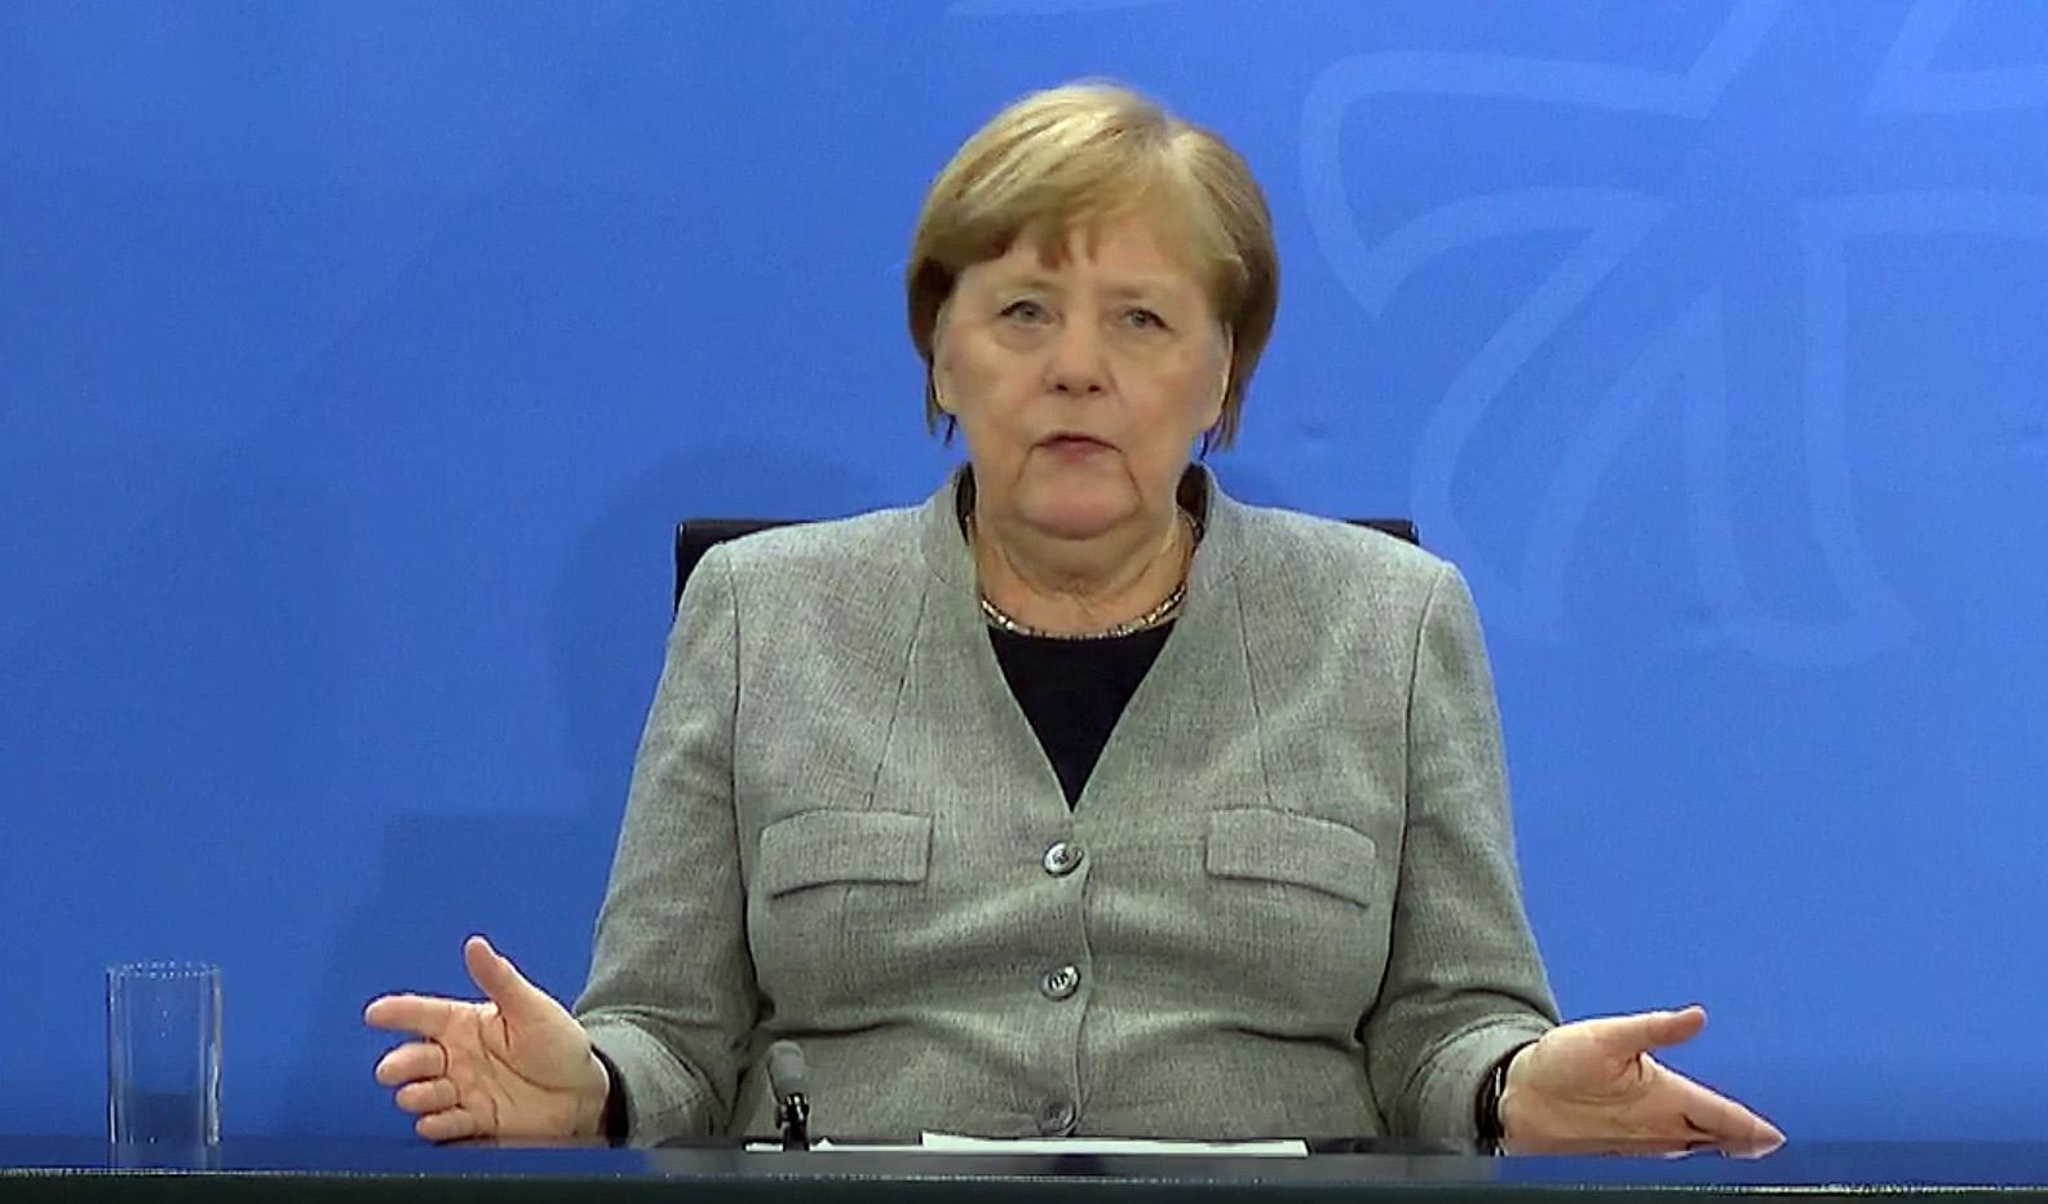 Merkel Pressekonferenz Livestream